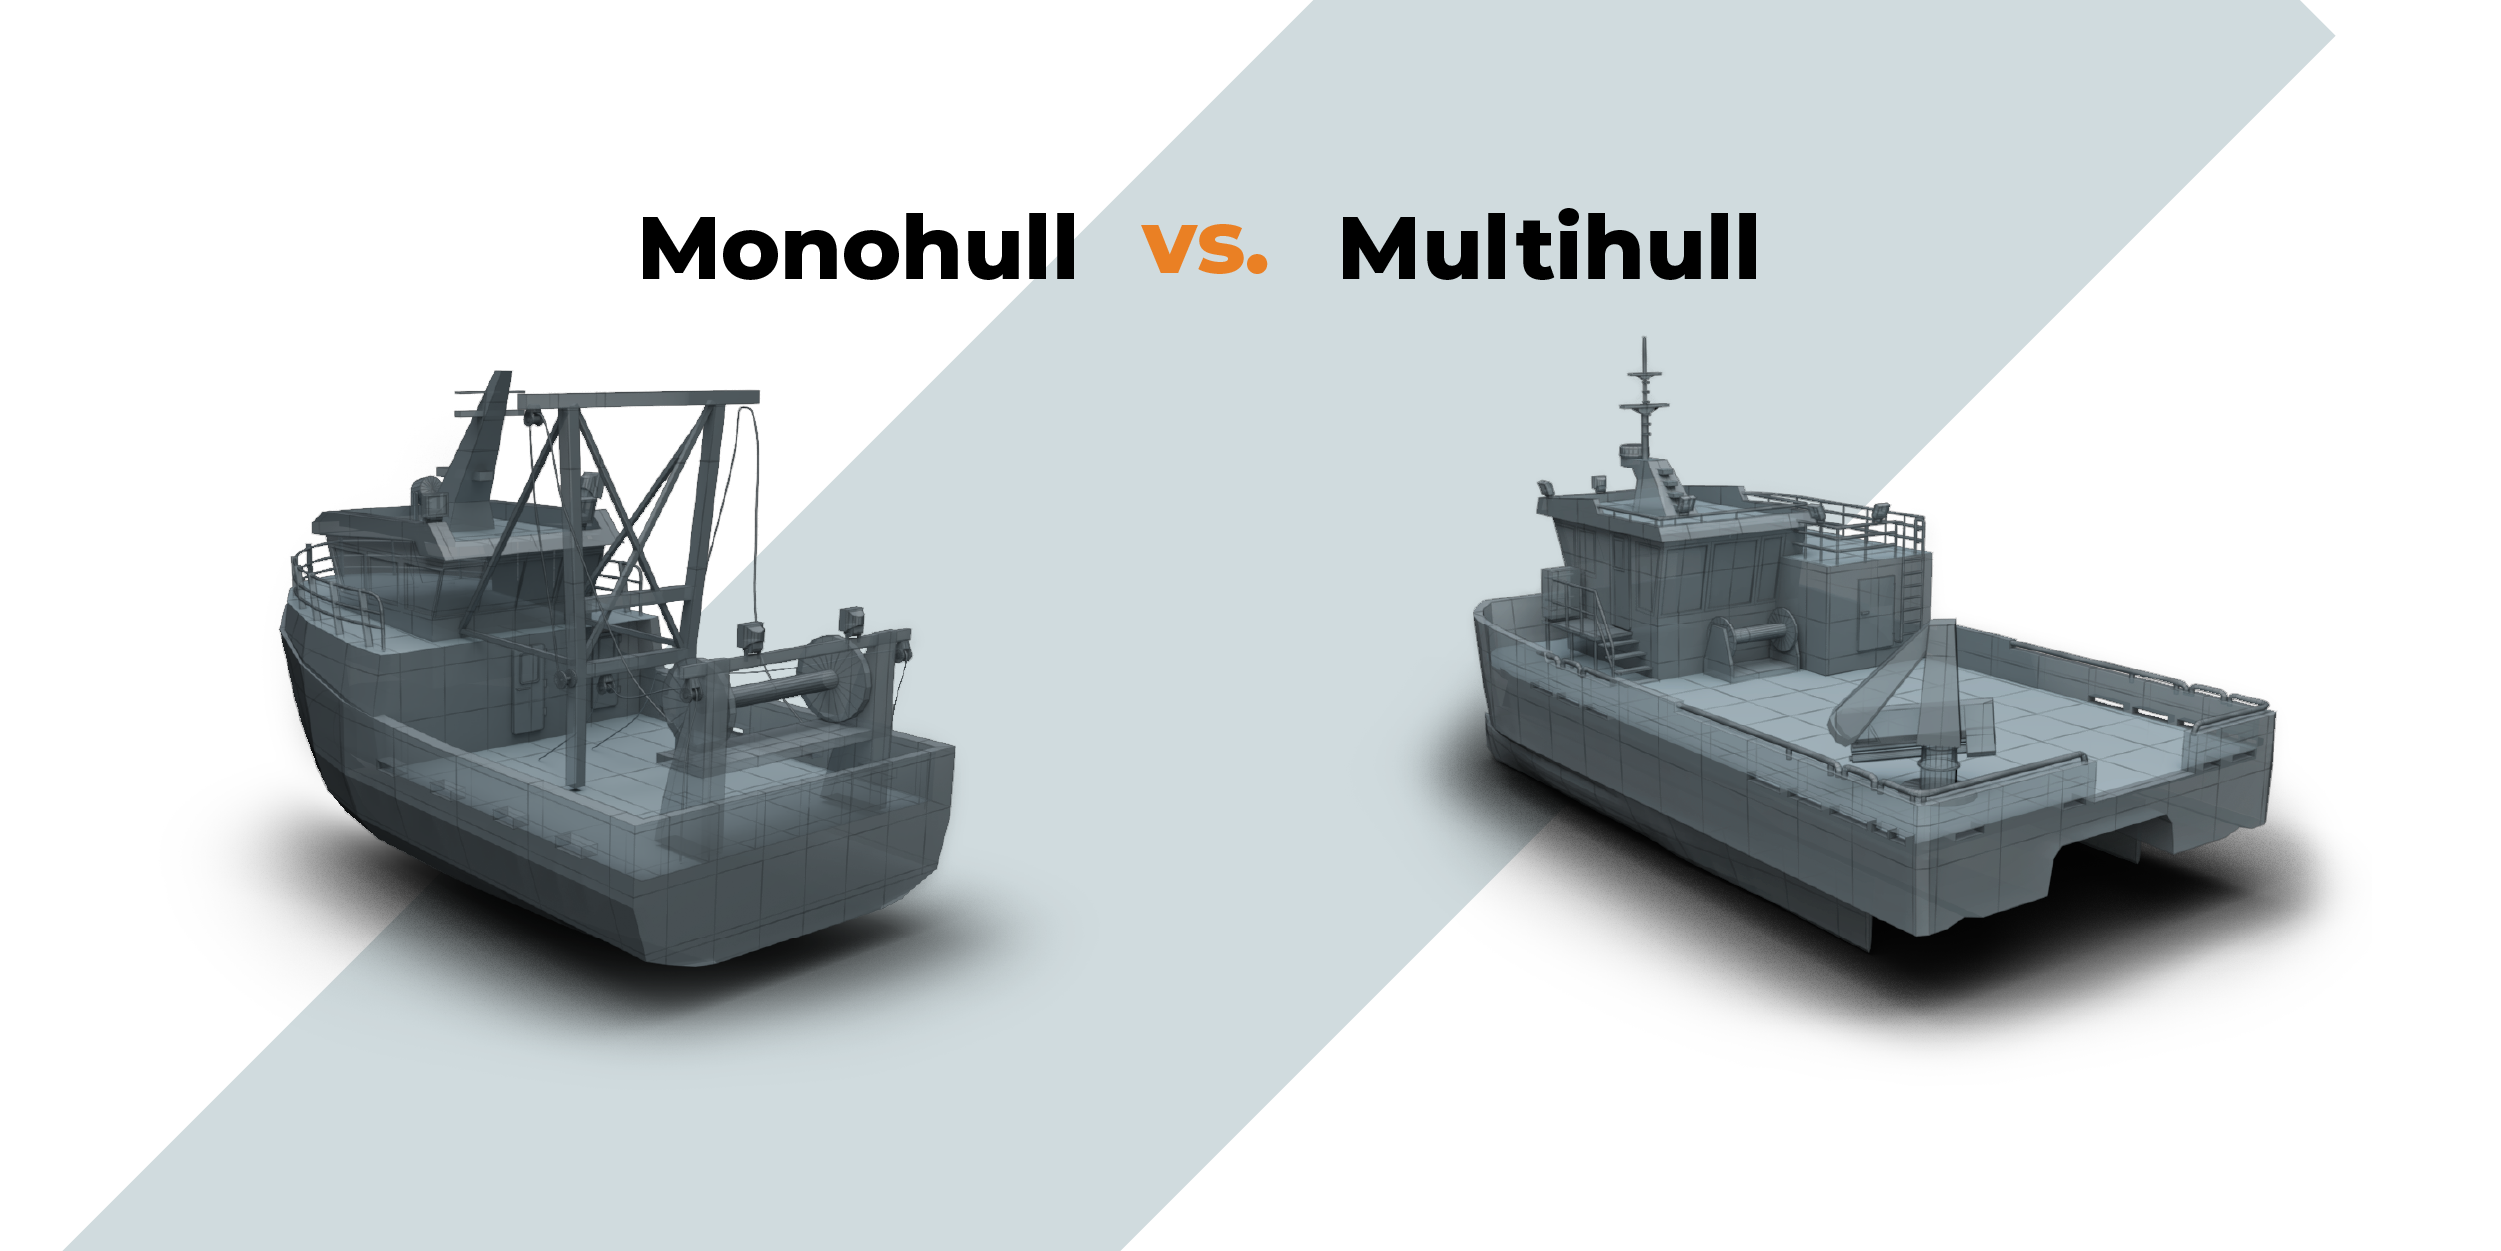 Monohull or Multihull?